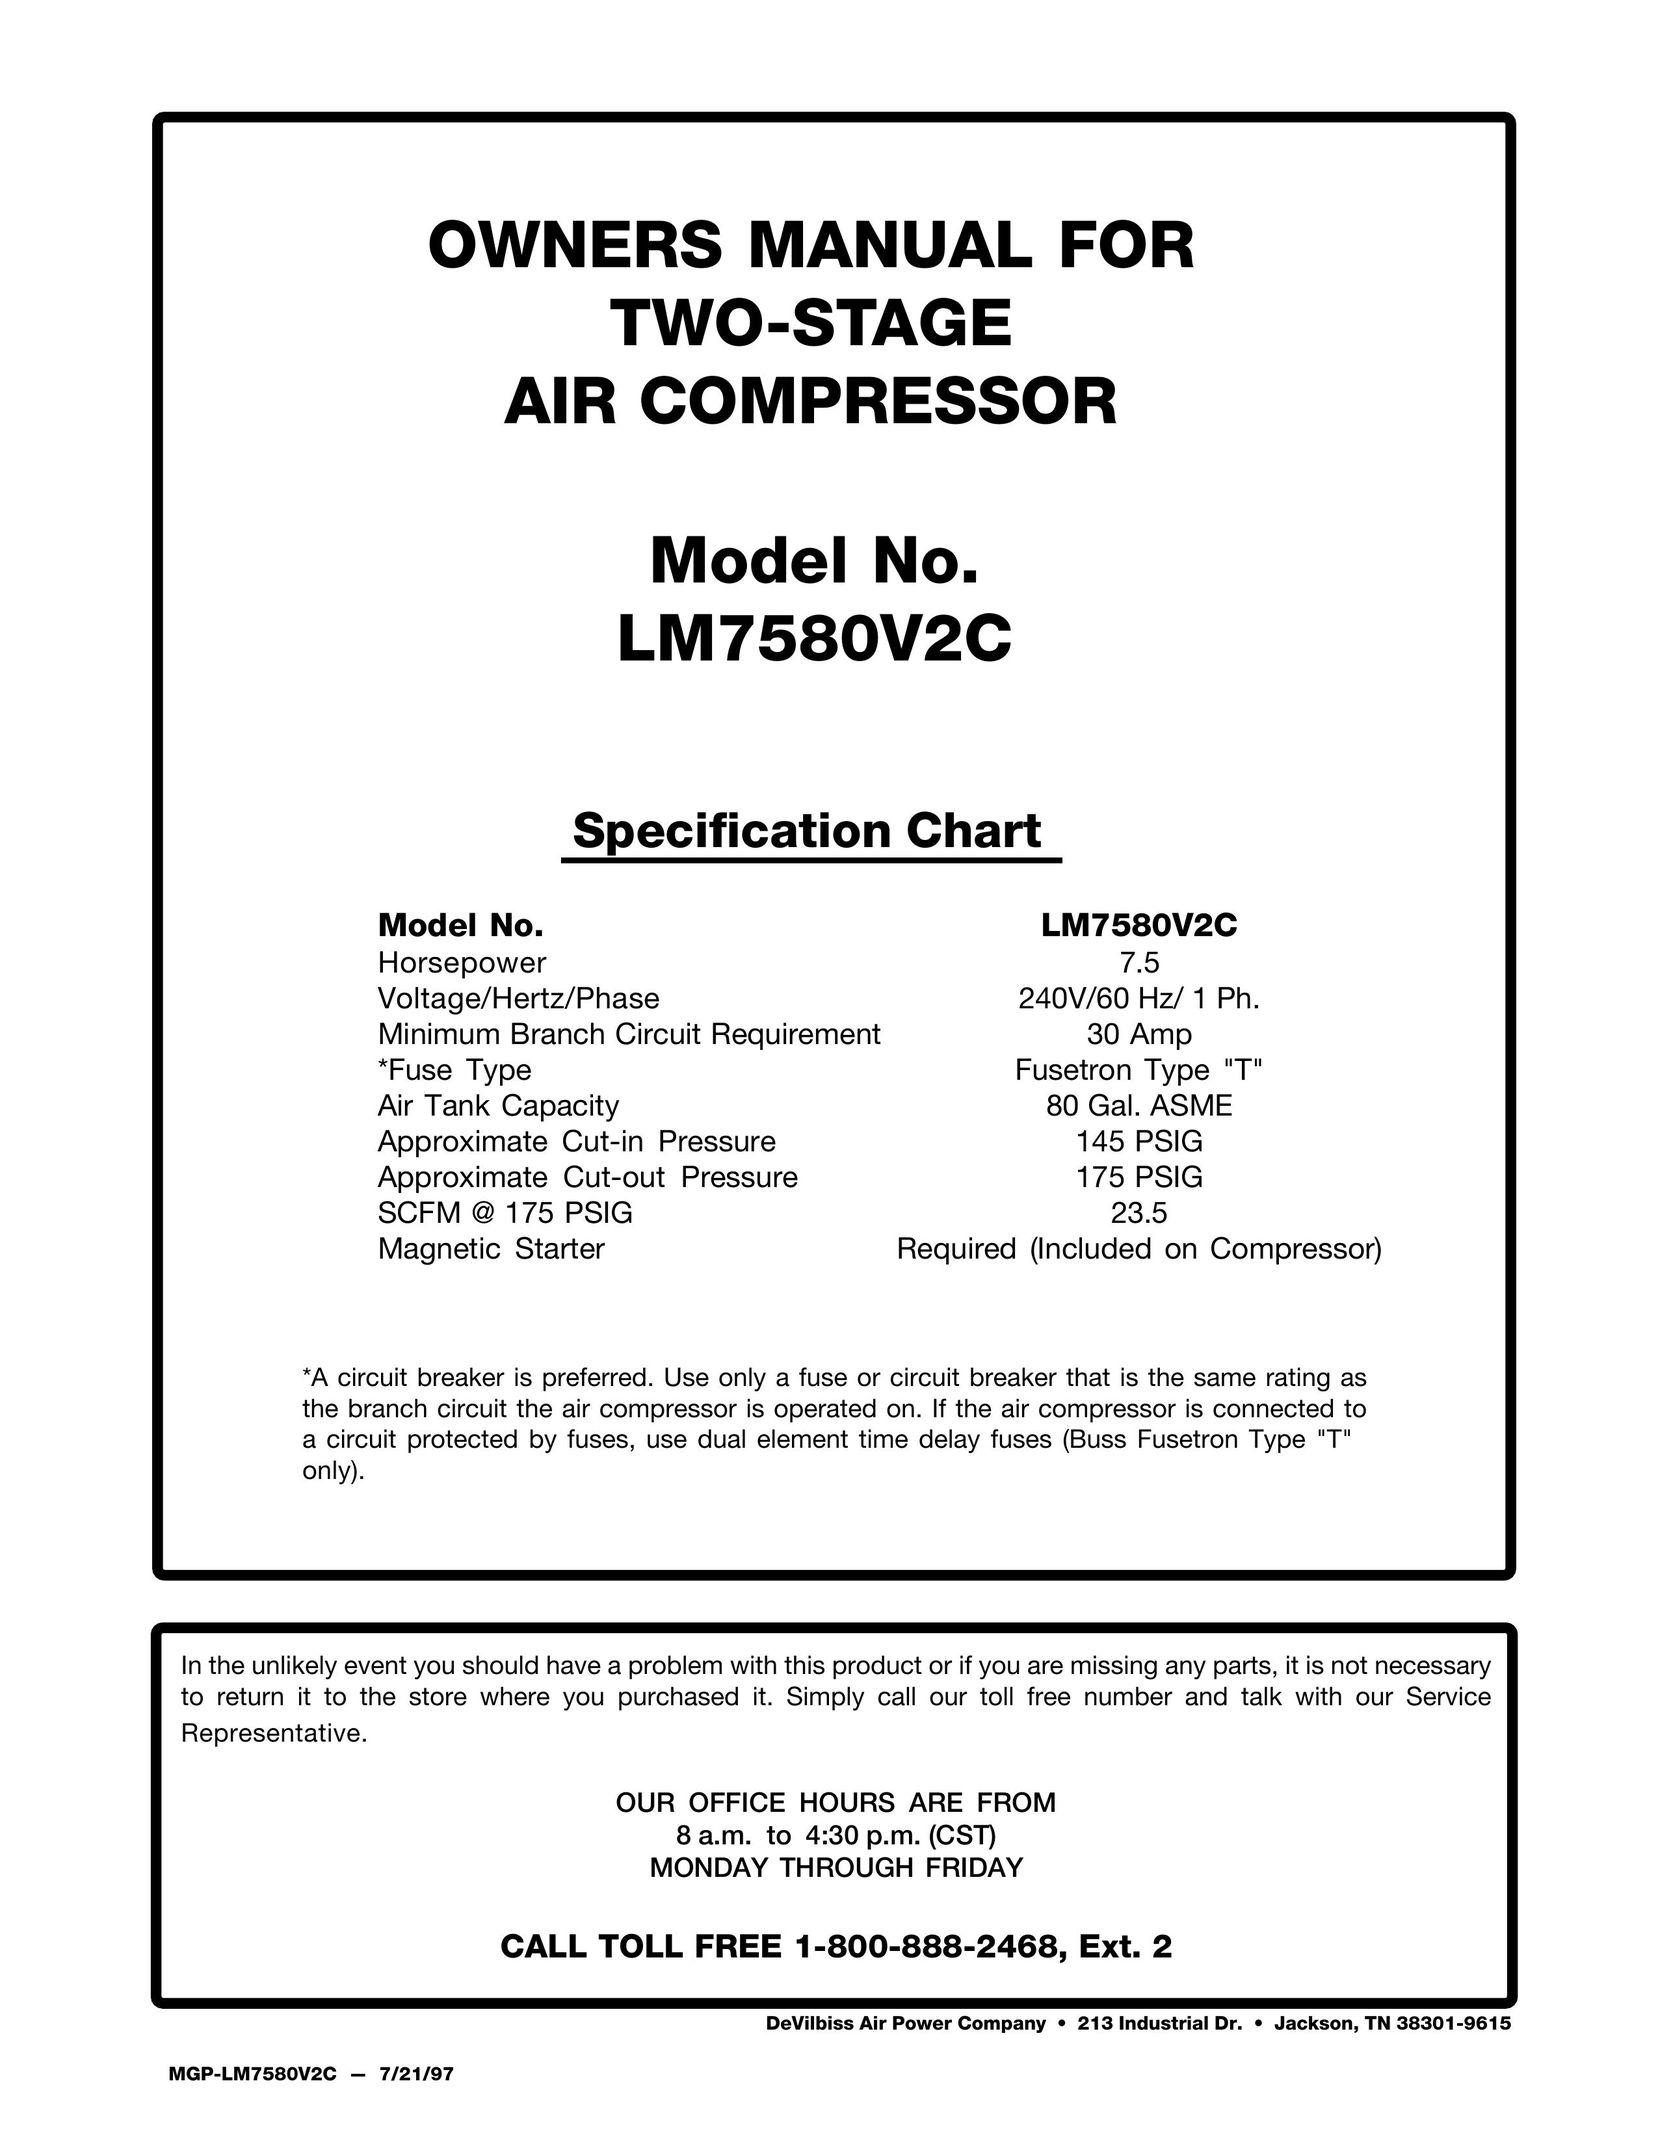 DeVillbiss Air Power Company LM7580V2C Air Compressor User Manual